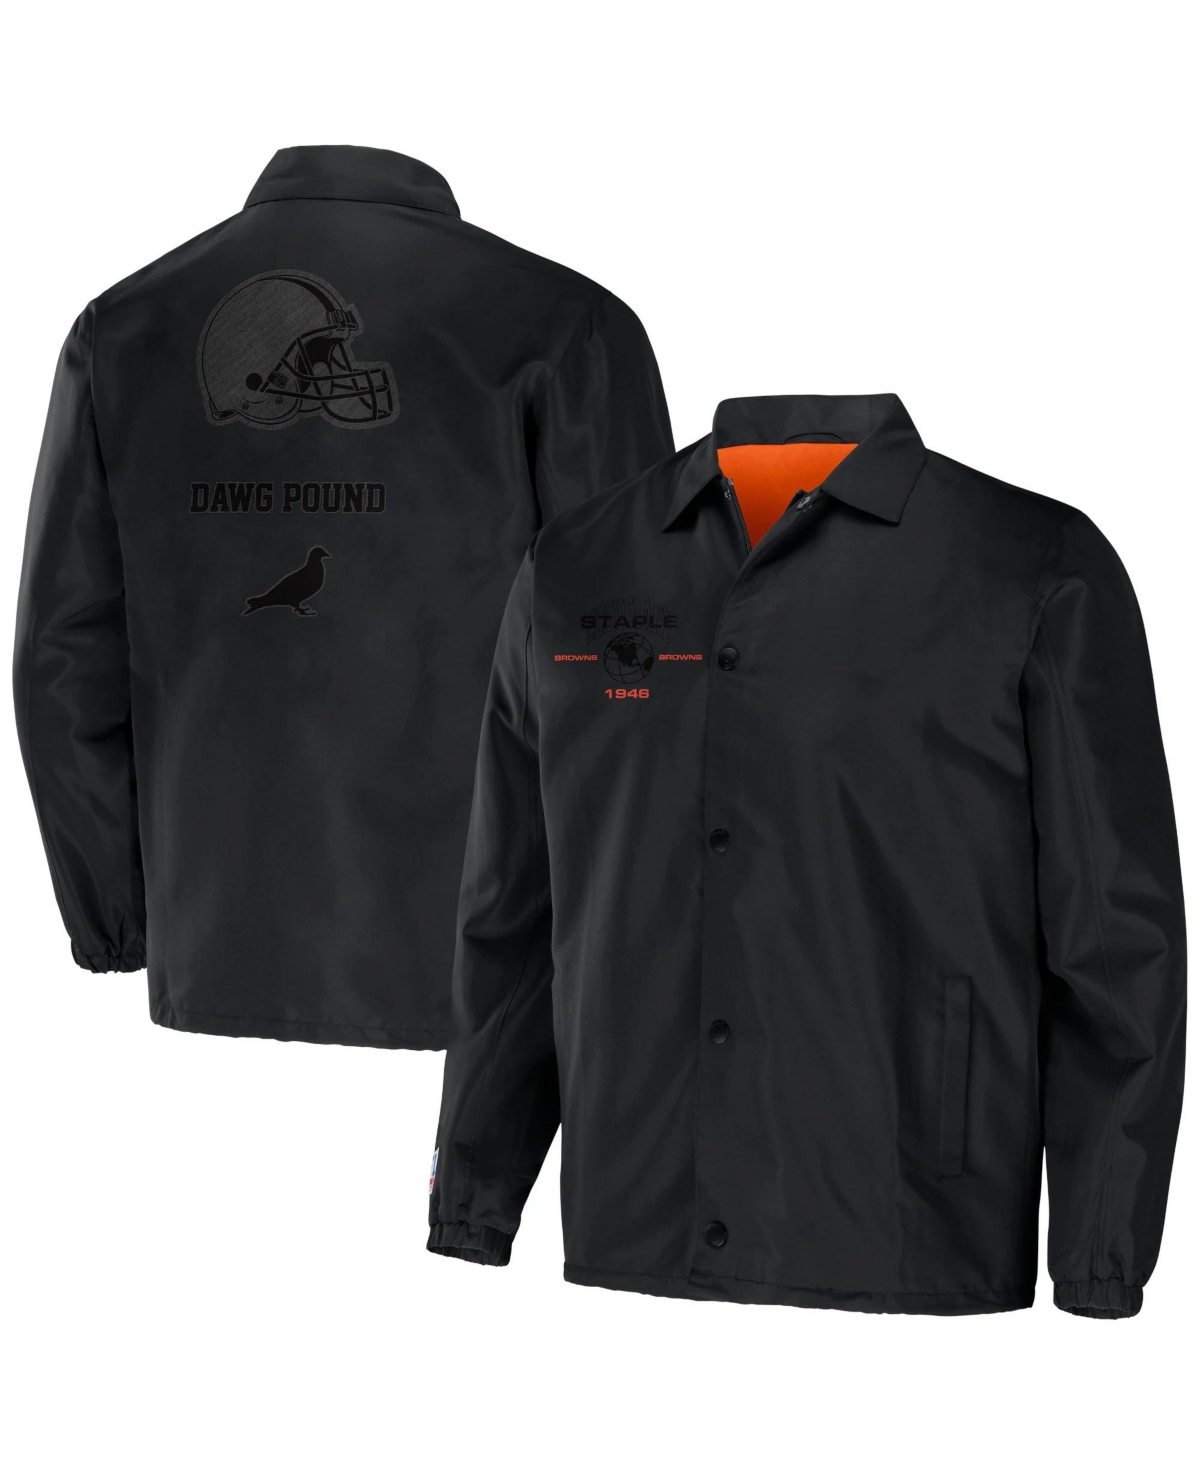 Nfl Properties Men's Nfl X Staple Black Cleveland Browns Embroidered Nylon Jacket